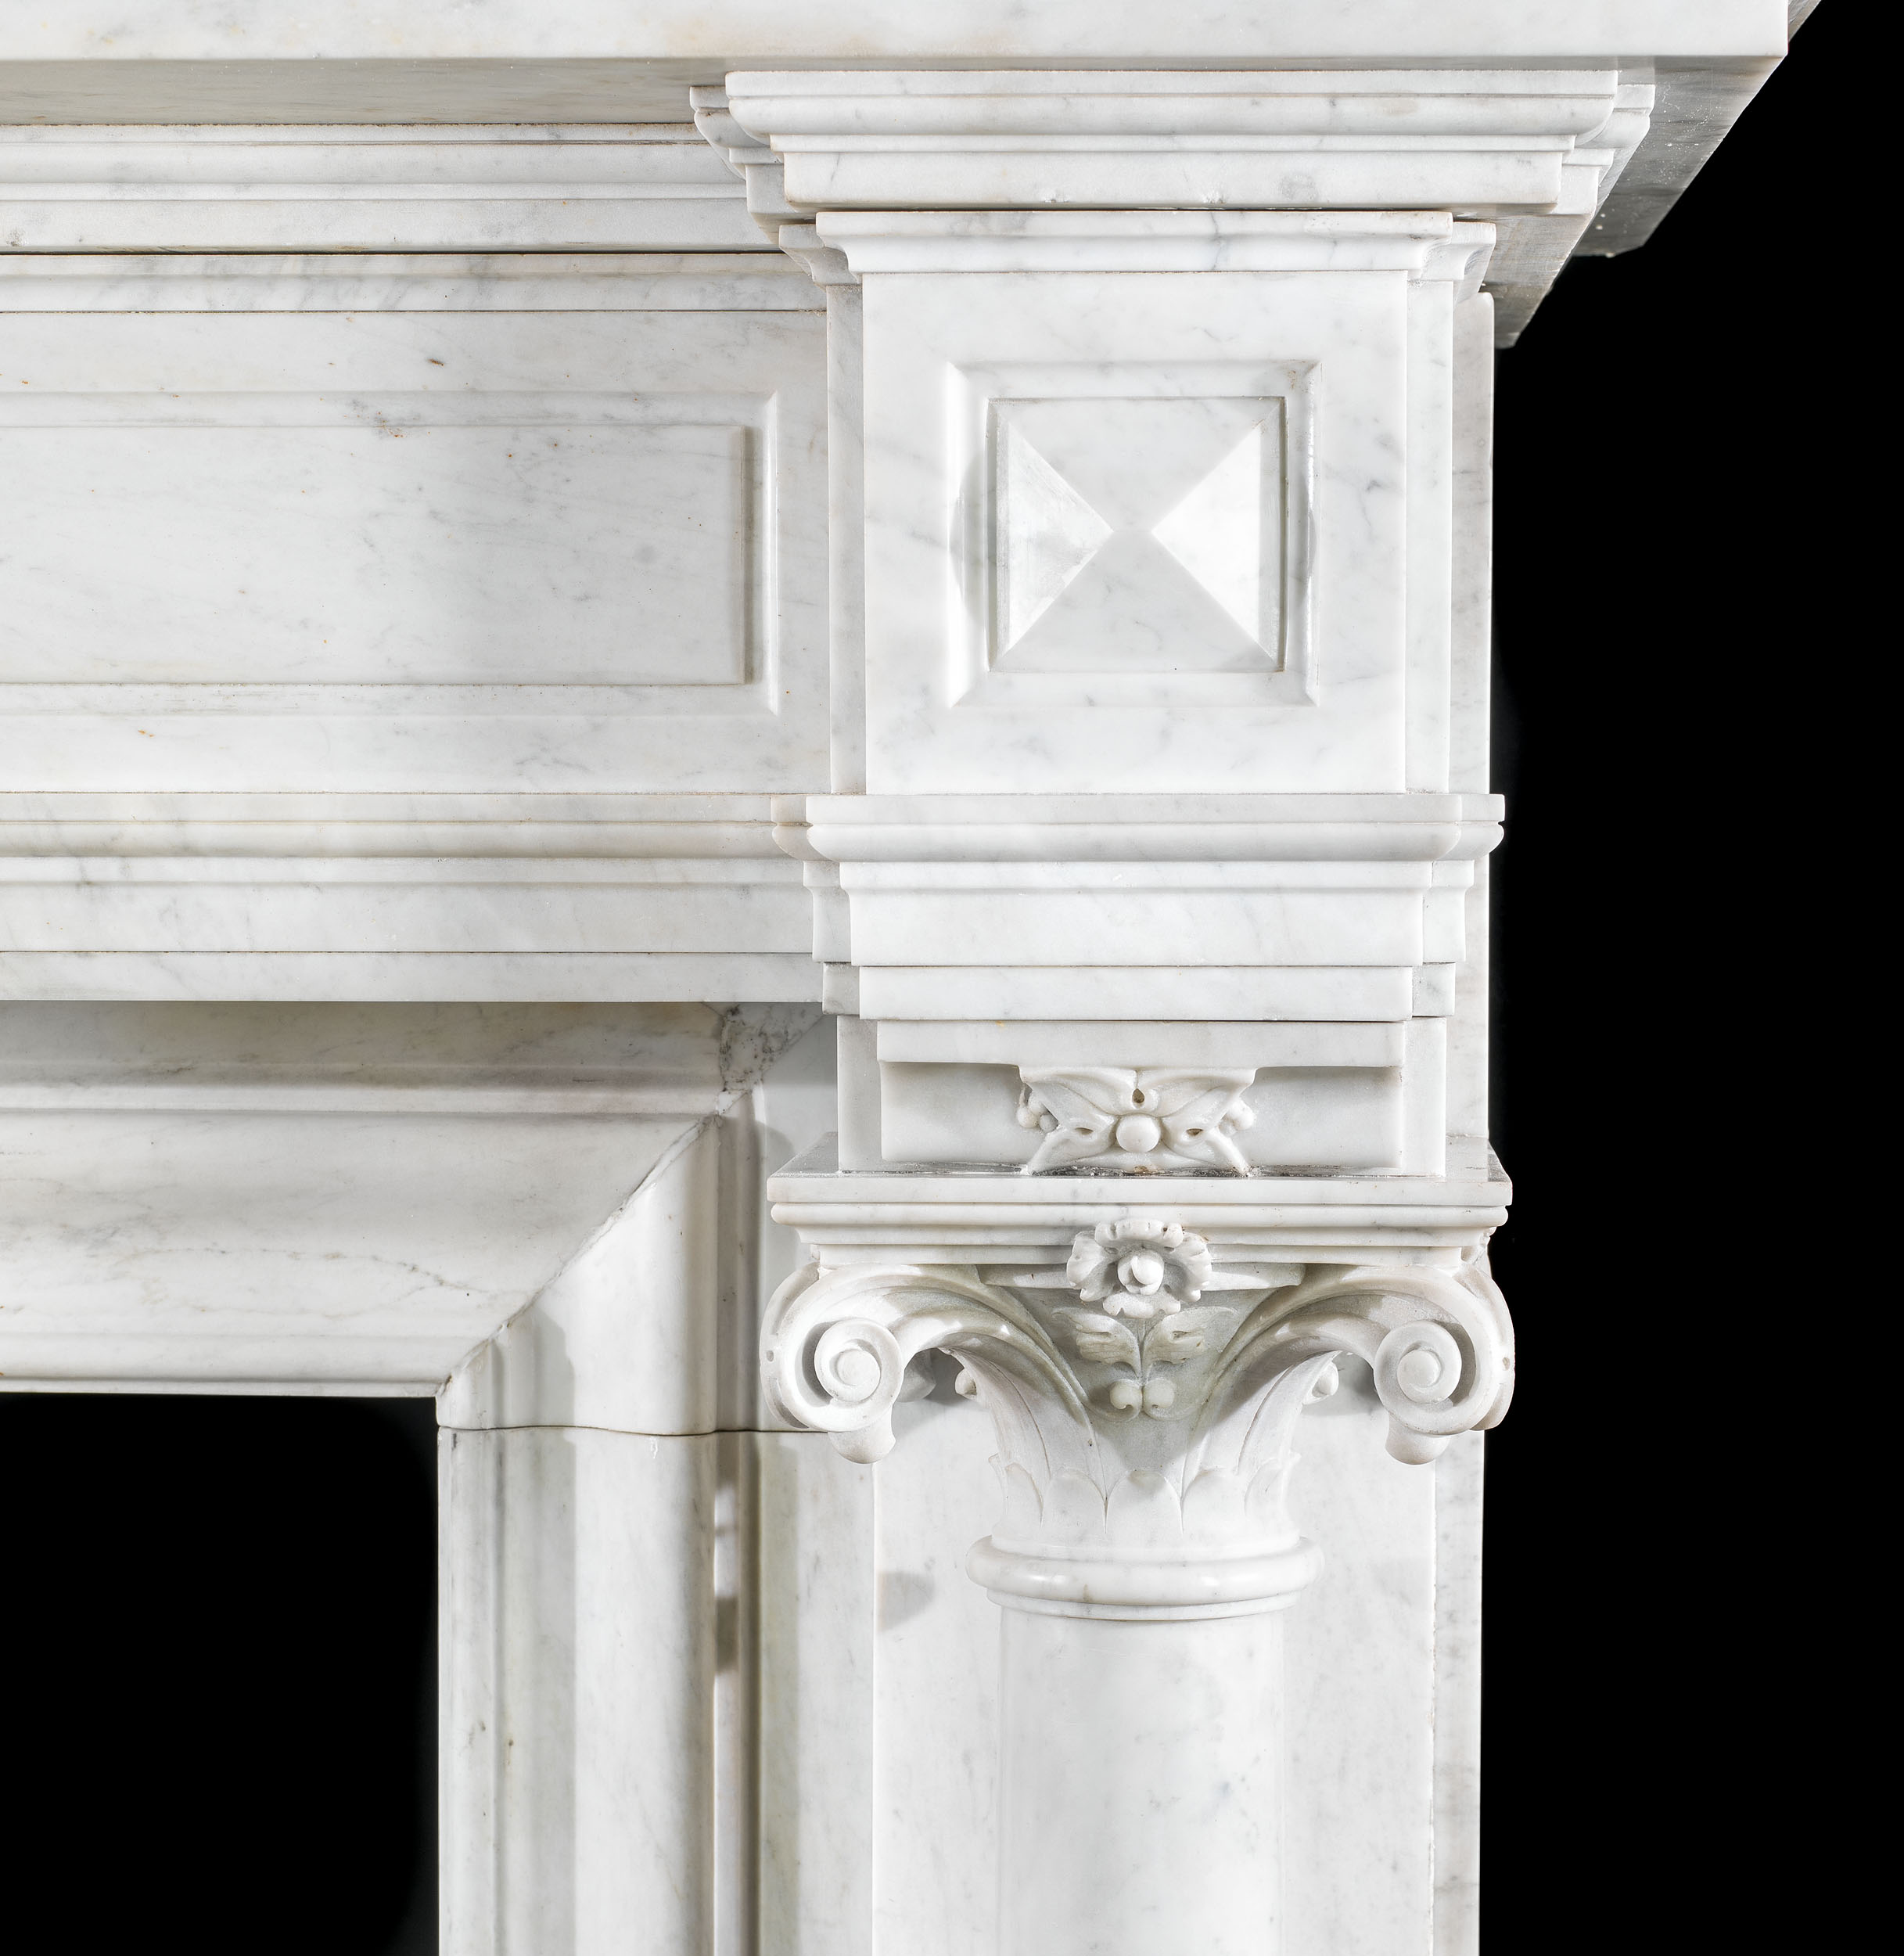  Belgian Columned Marble Fireplace Mantel